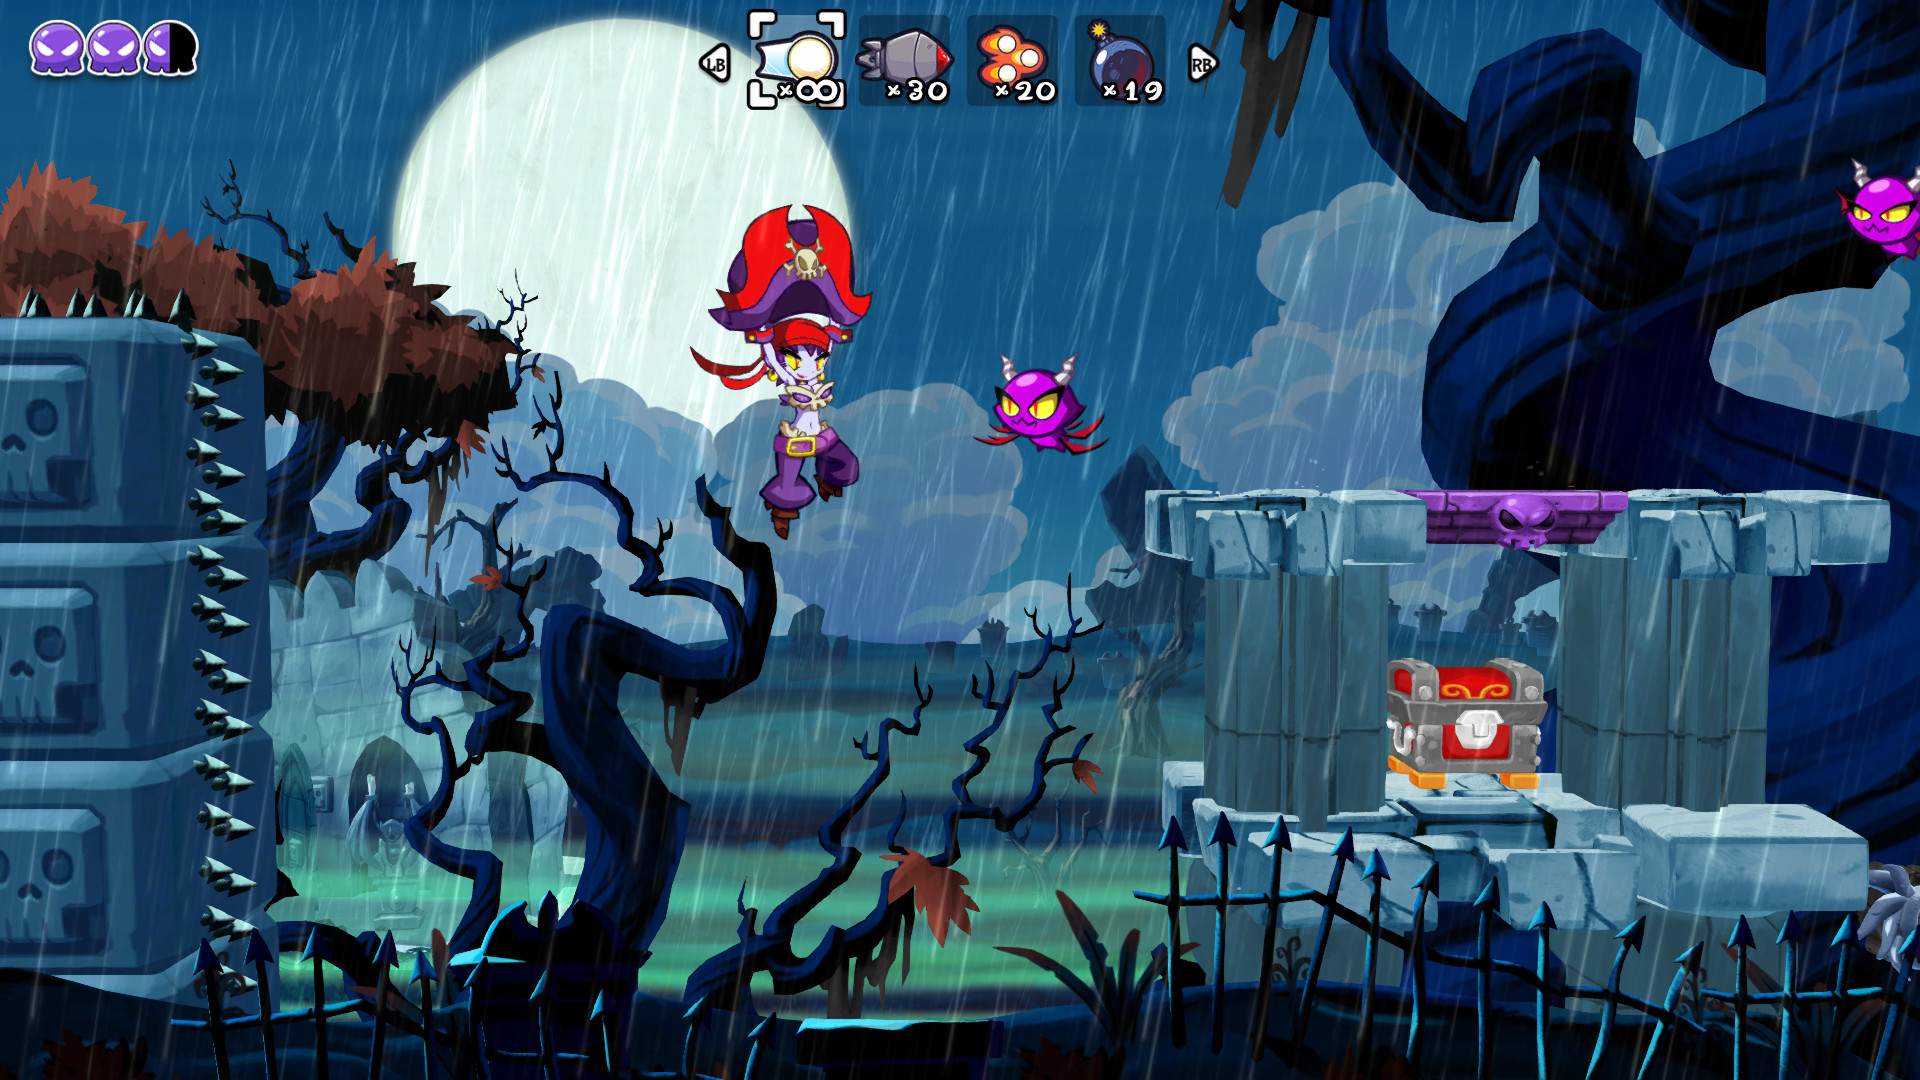 Shantae: Half-Genie Hero Ultimate Edition screenshot